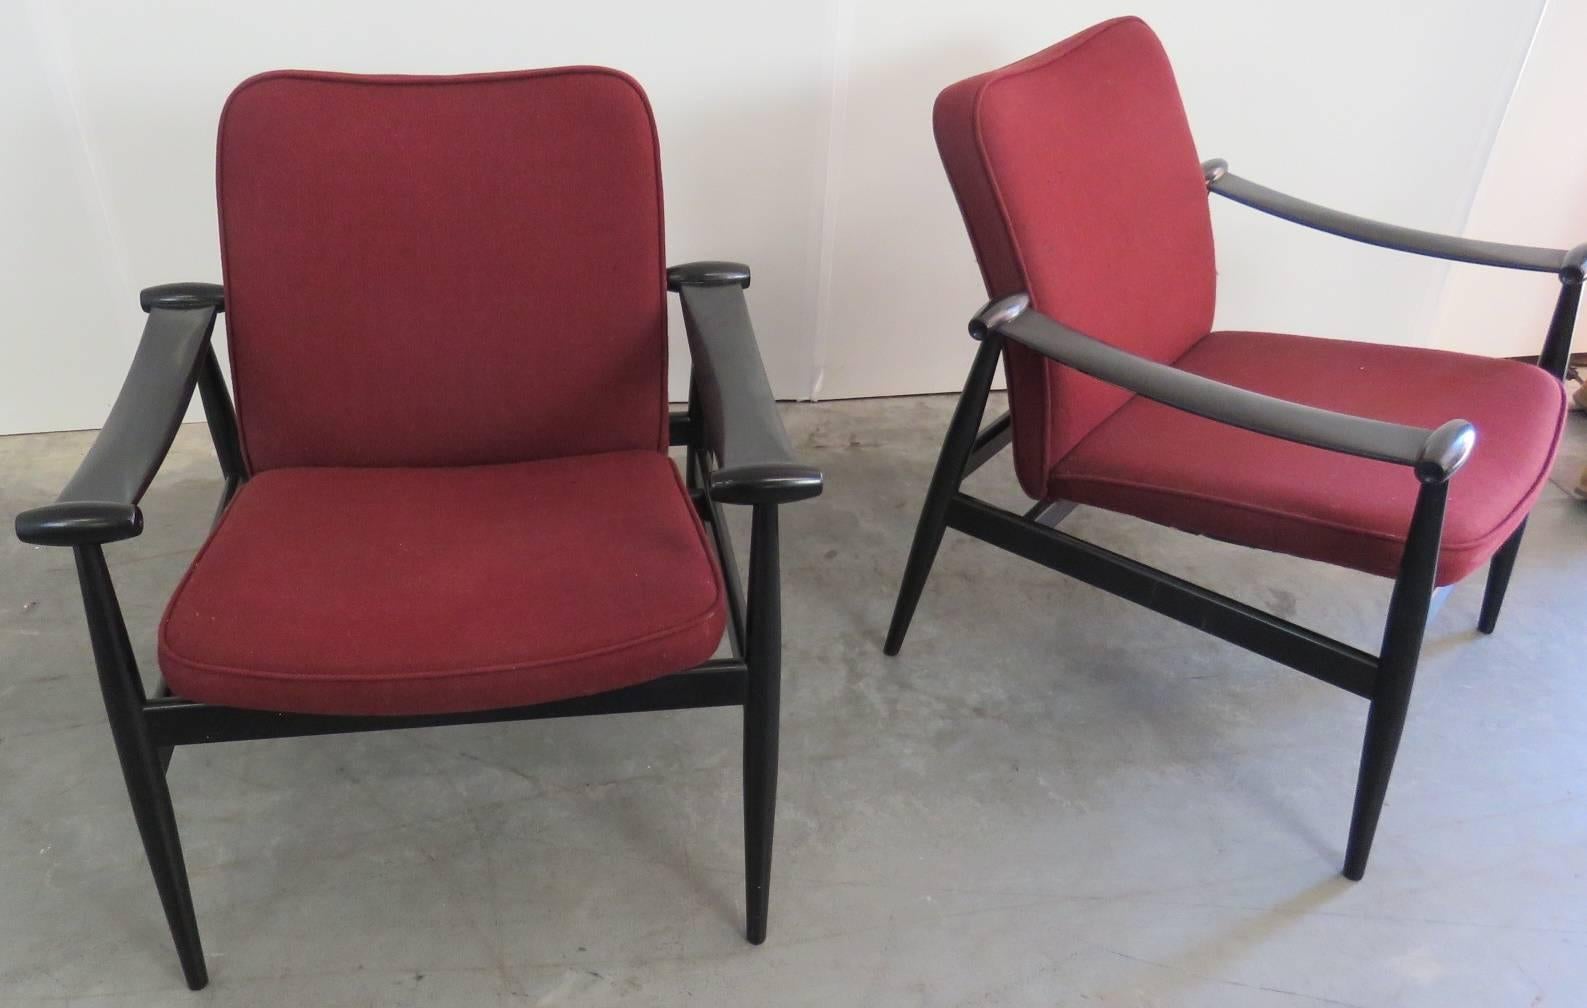 Pair of Finn Juhl ebonized armchairs. Measures: 17